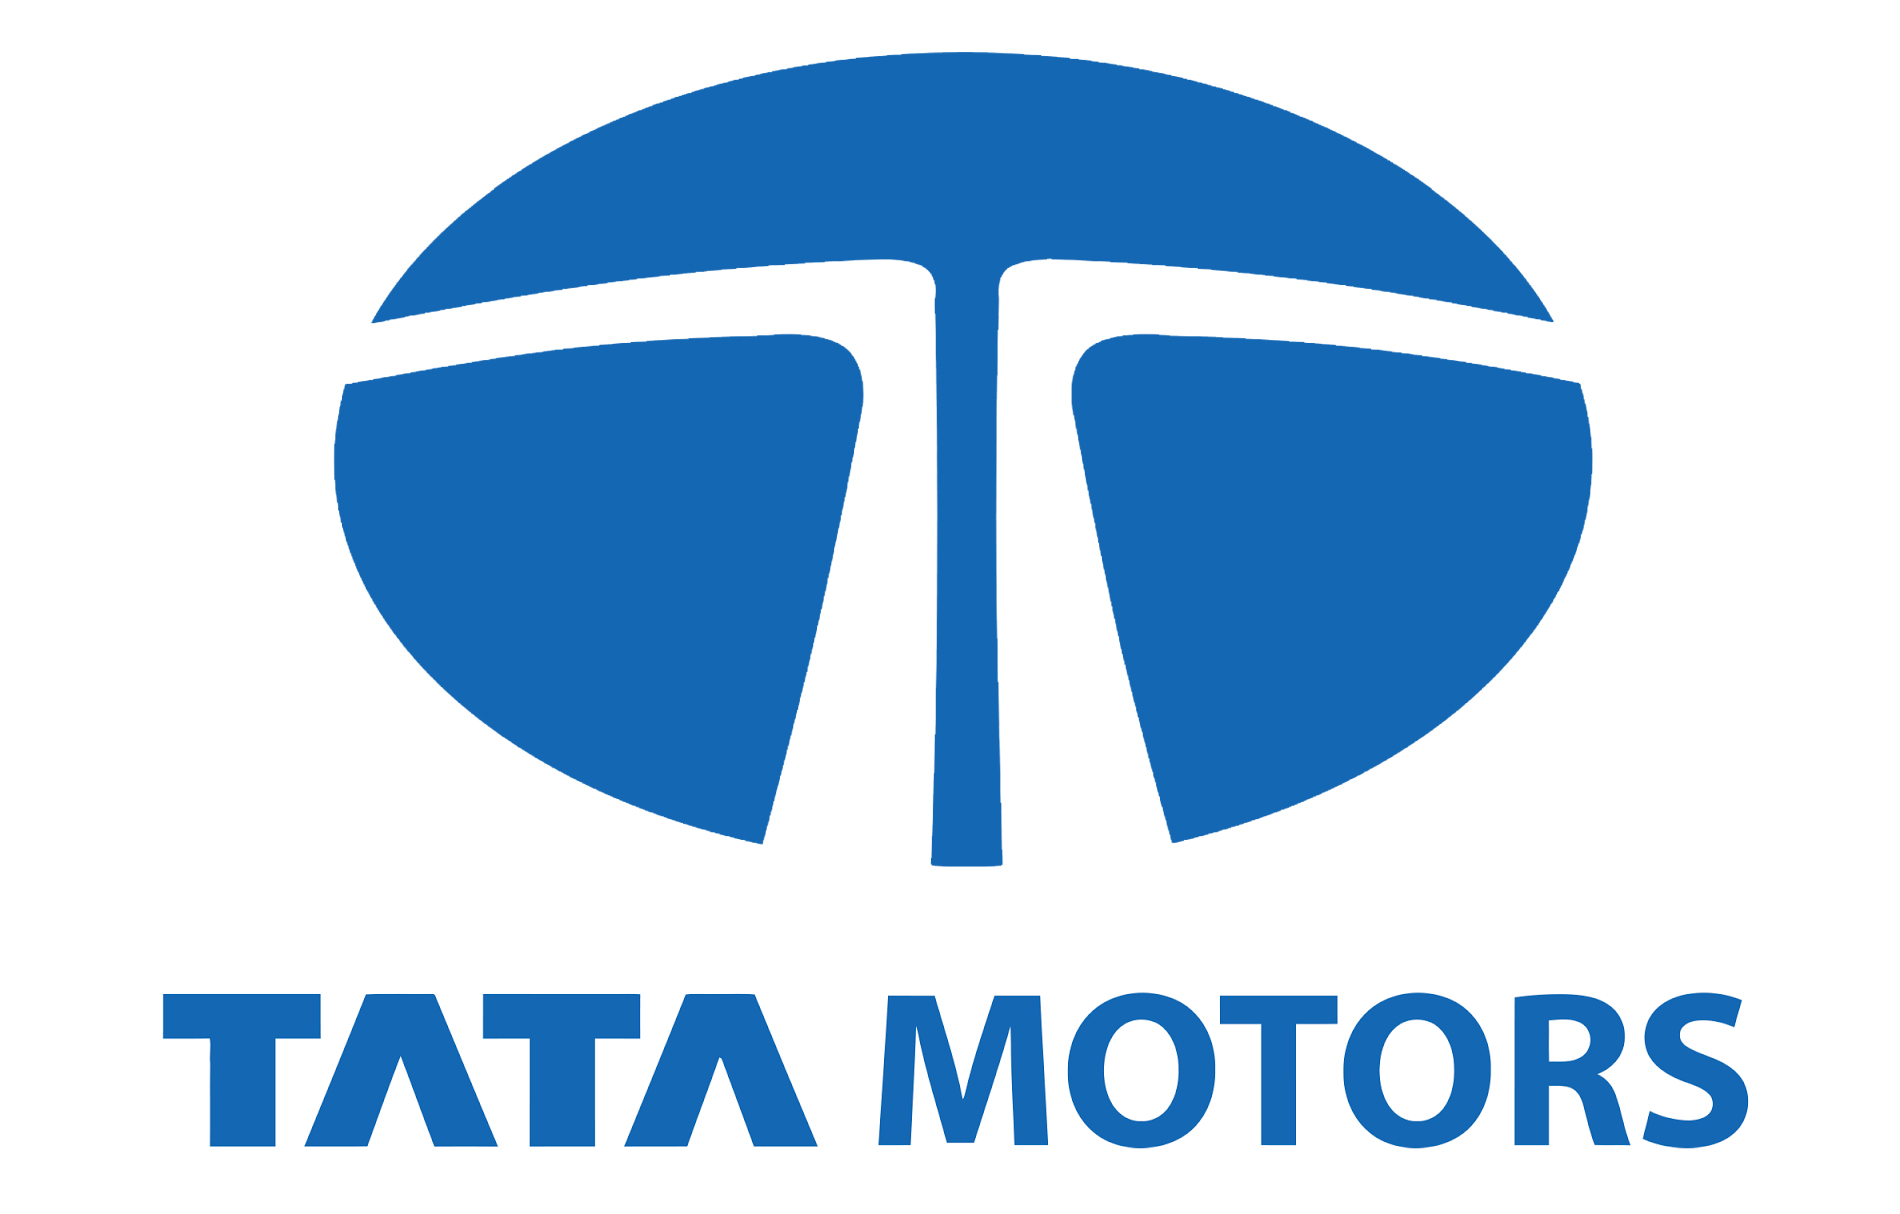 Tata Motors Cars Showroom - Mac Vehicles|Show Room|Automotive